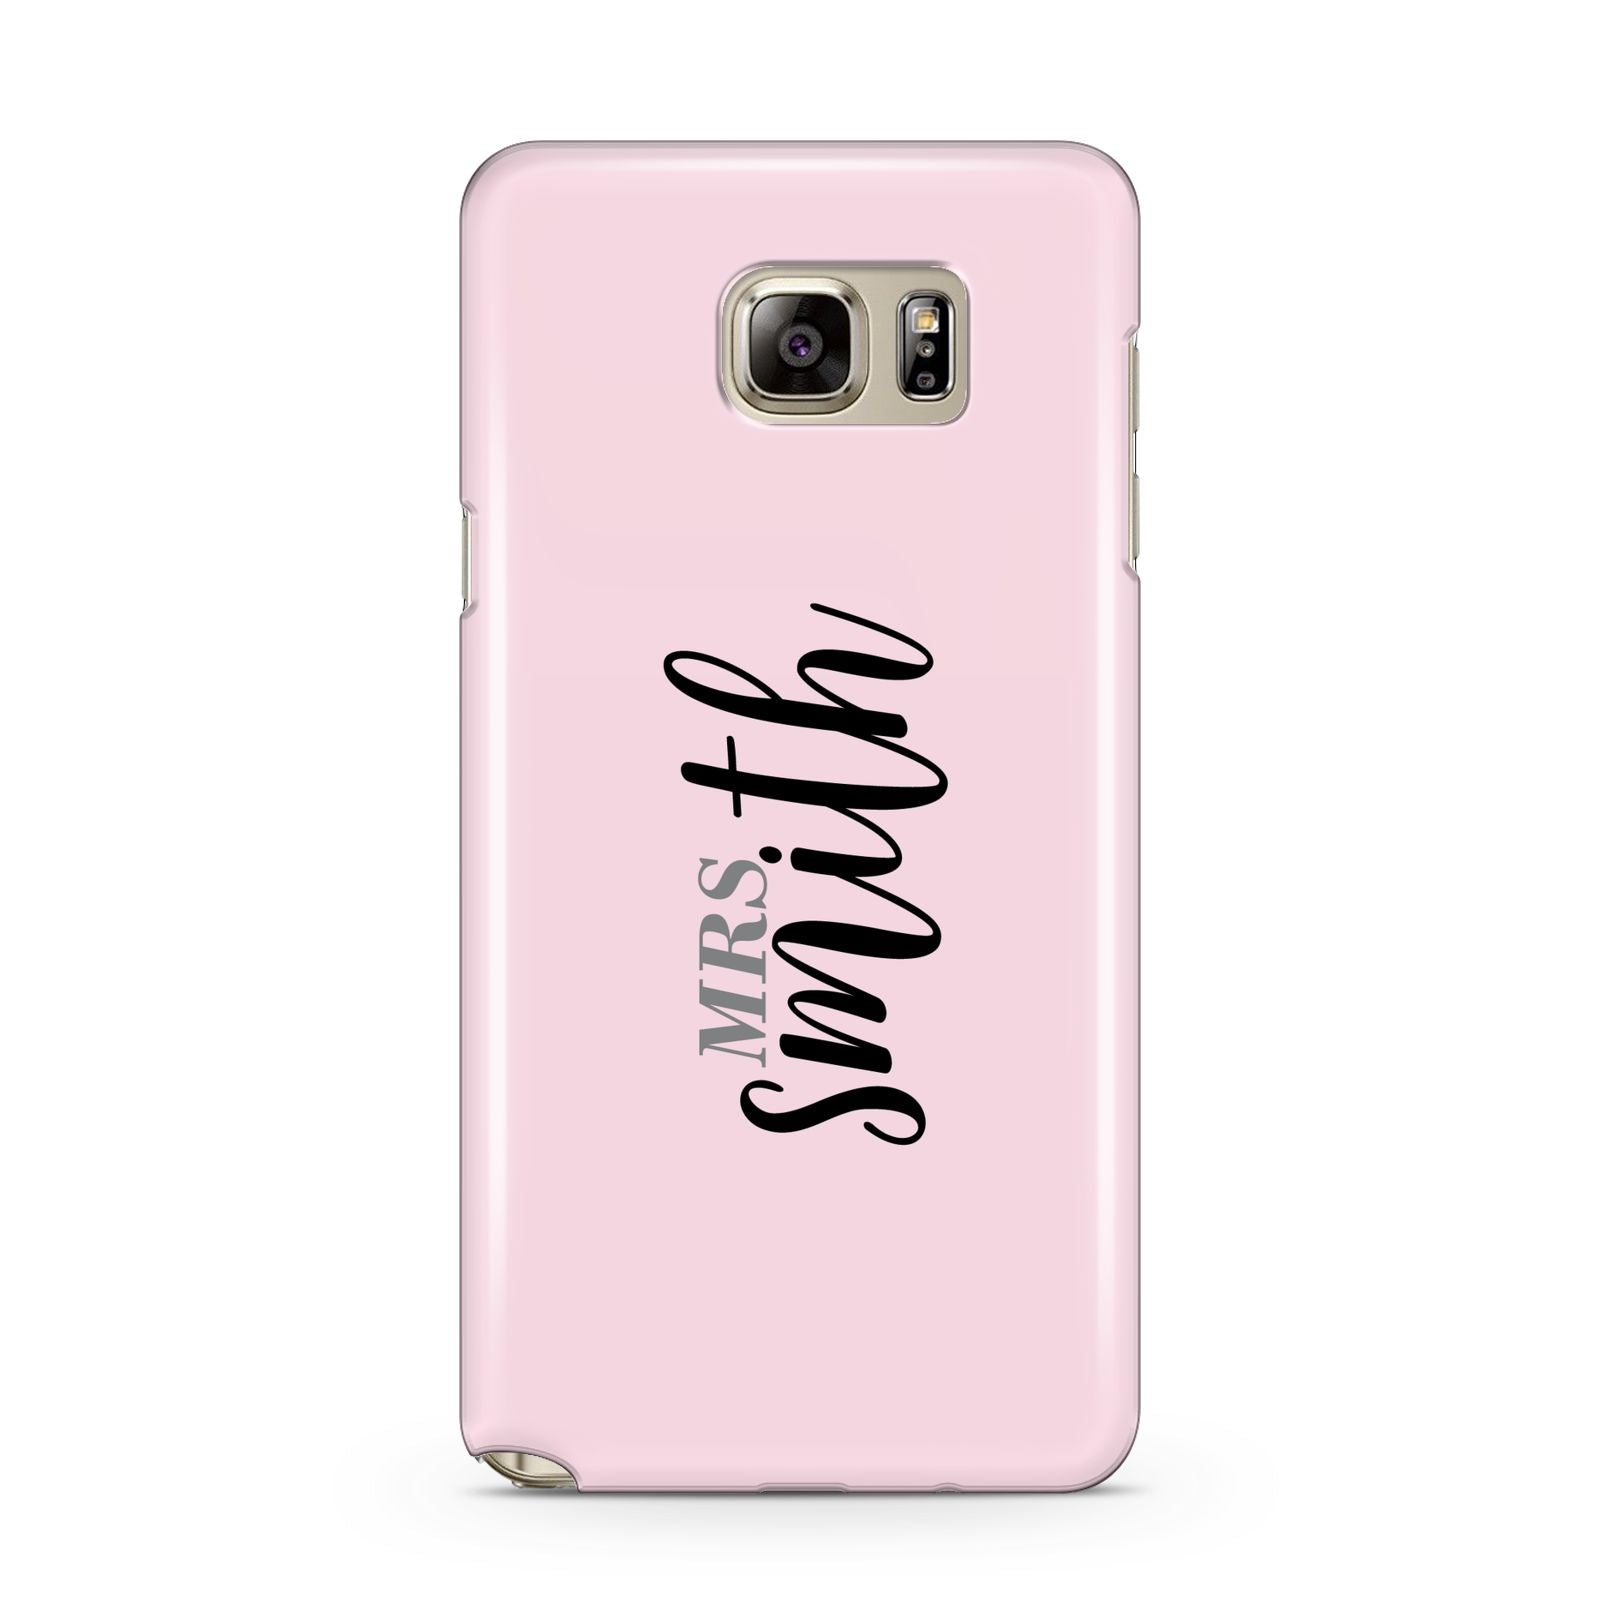 Personalised Bridal Samsung Galaxy Note 5 Case